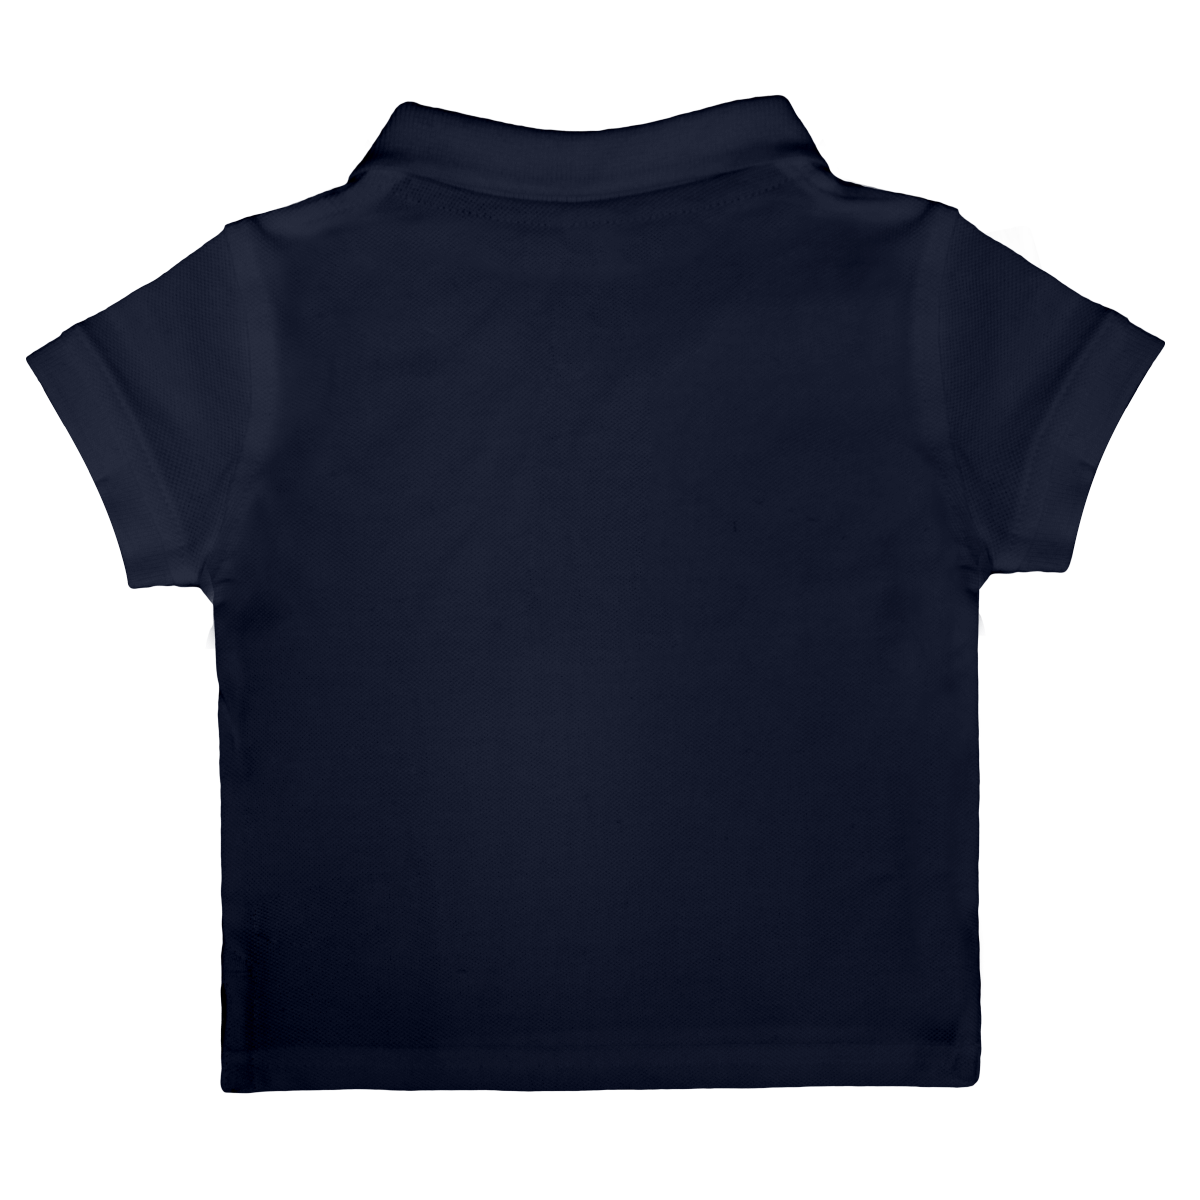 Customizable Polo Shirt For Baby Boy And Girl Navy